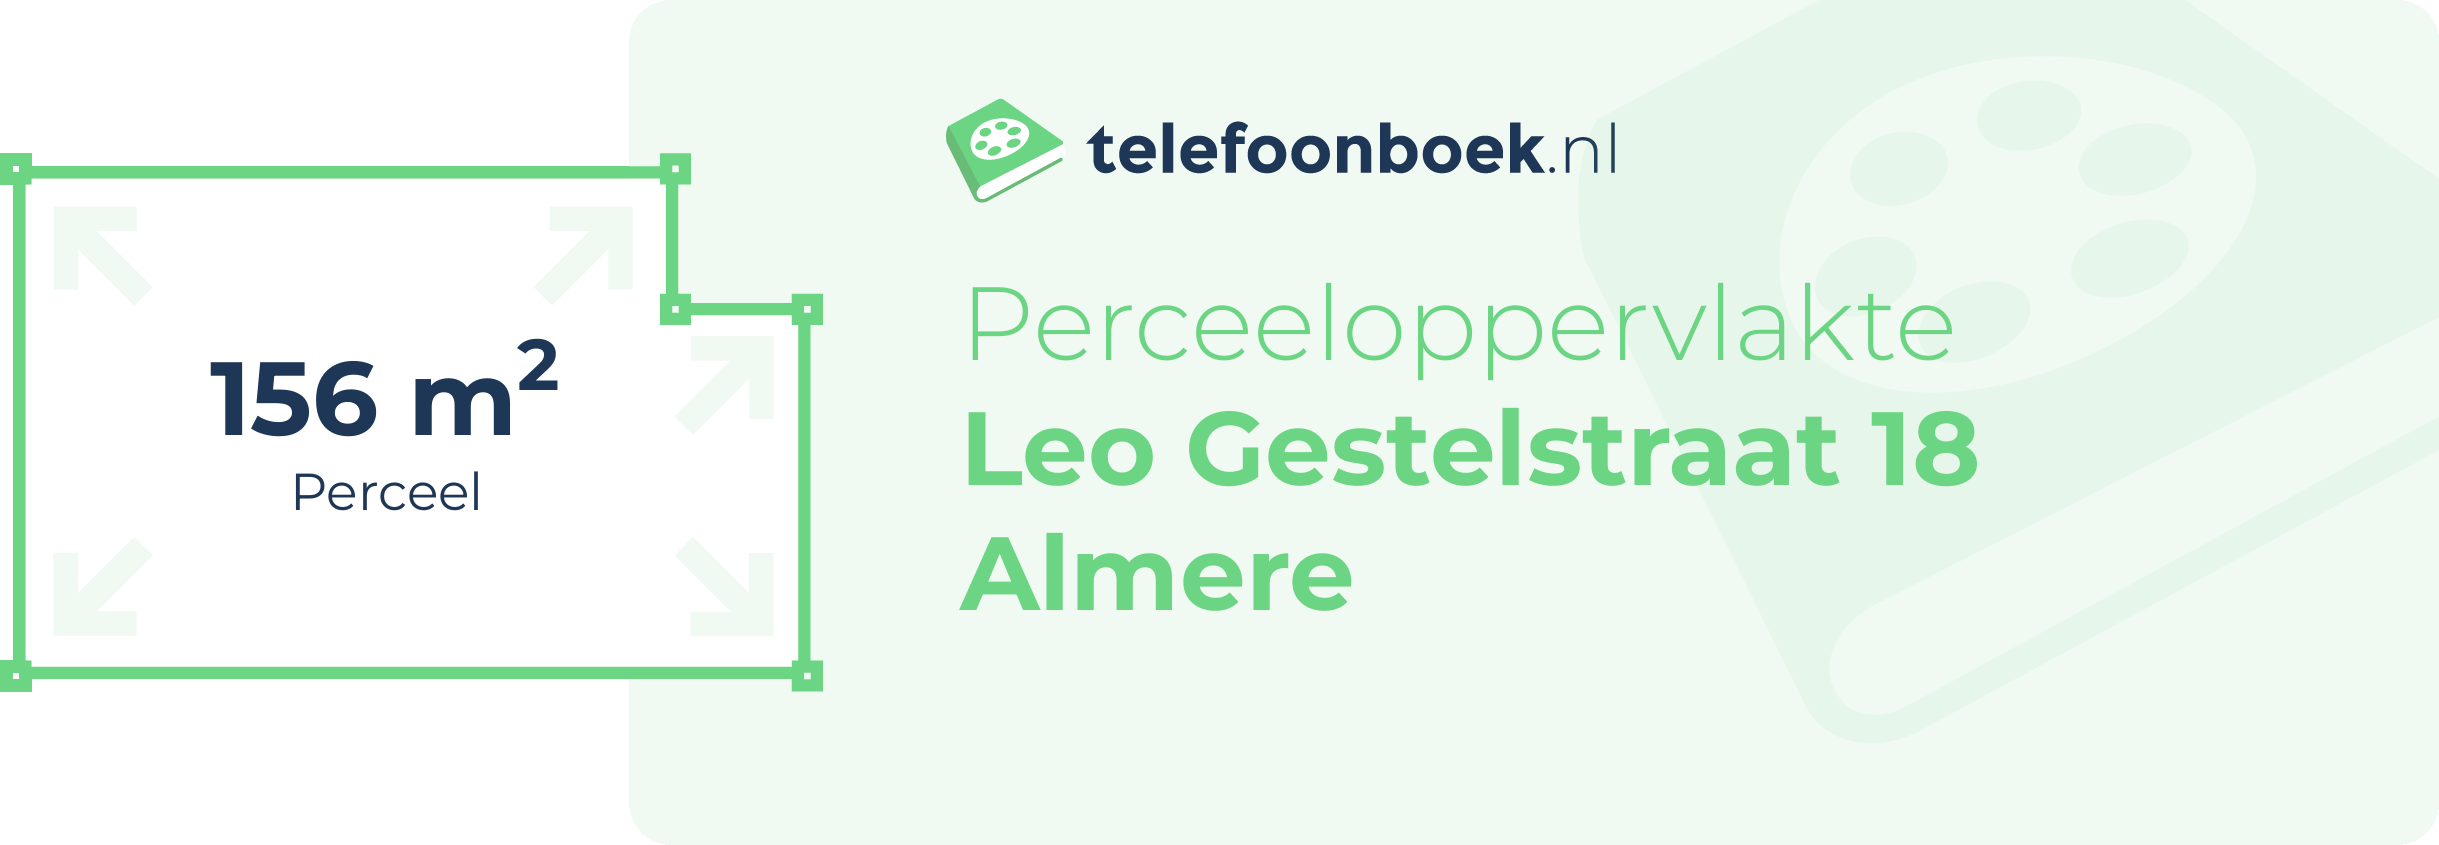 Perceeloppervlakte Leo Gestelstraat 18 Almere